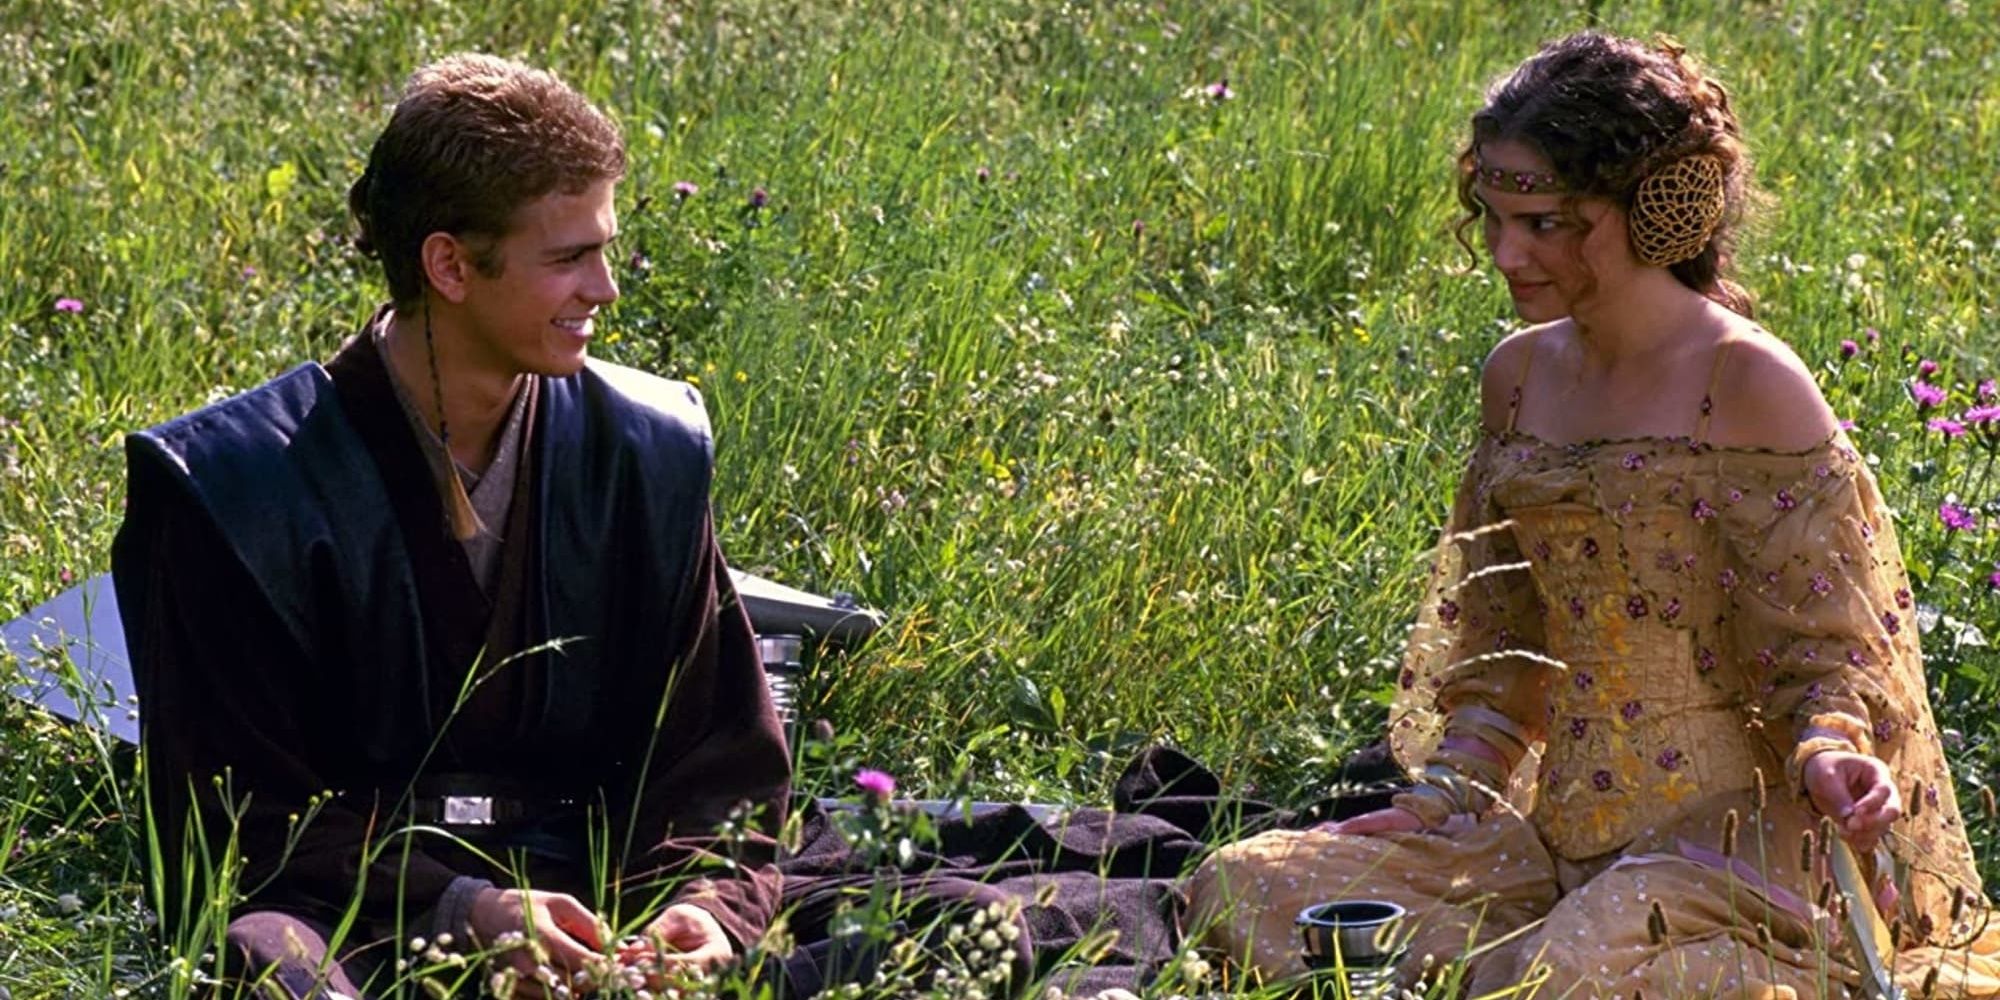 Anakin Skywalk and Padme Amidala enjoy a picnic in Naboo meadow